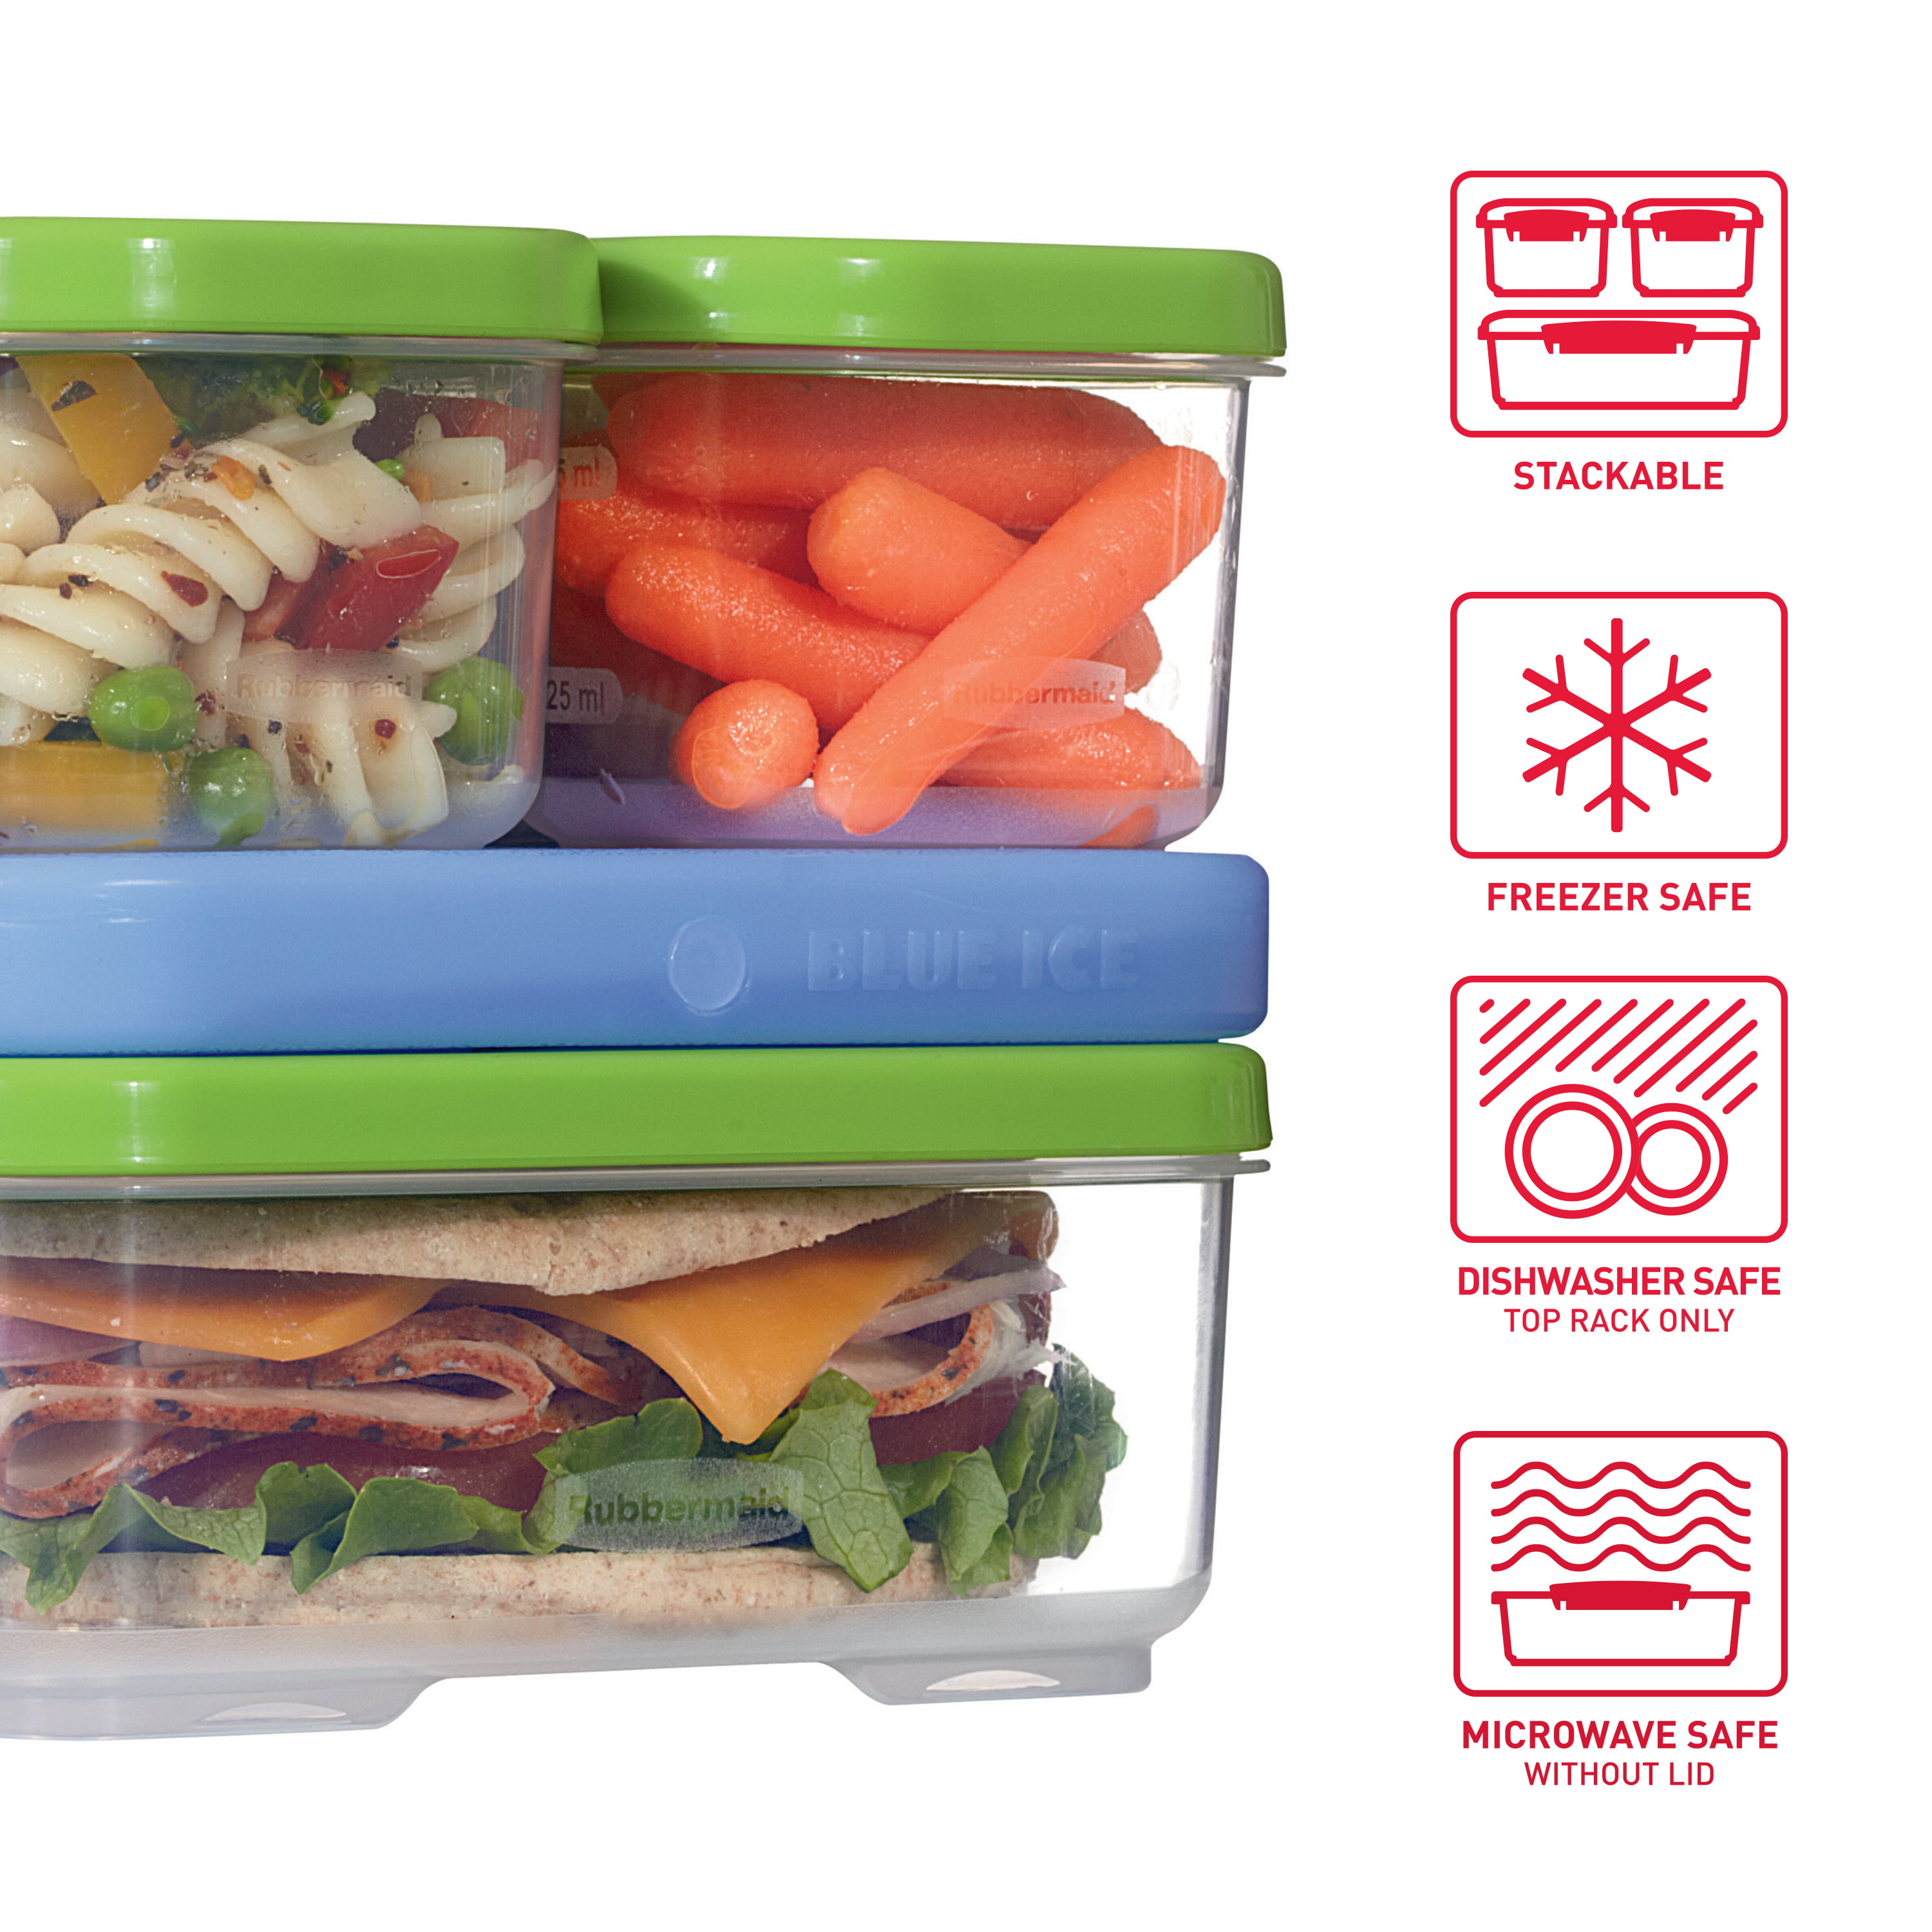 Rubbermaid LunchBlox Sandwich Kit Review & Coupon